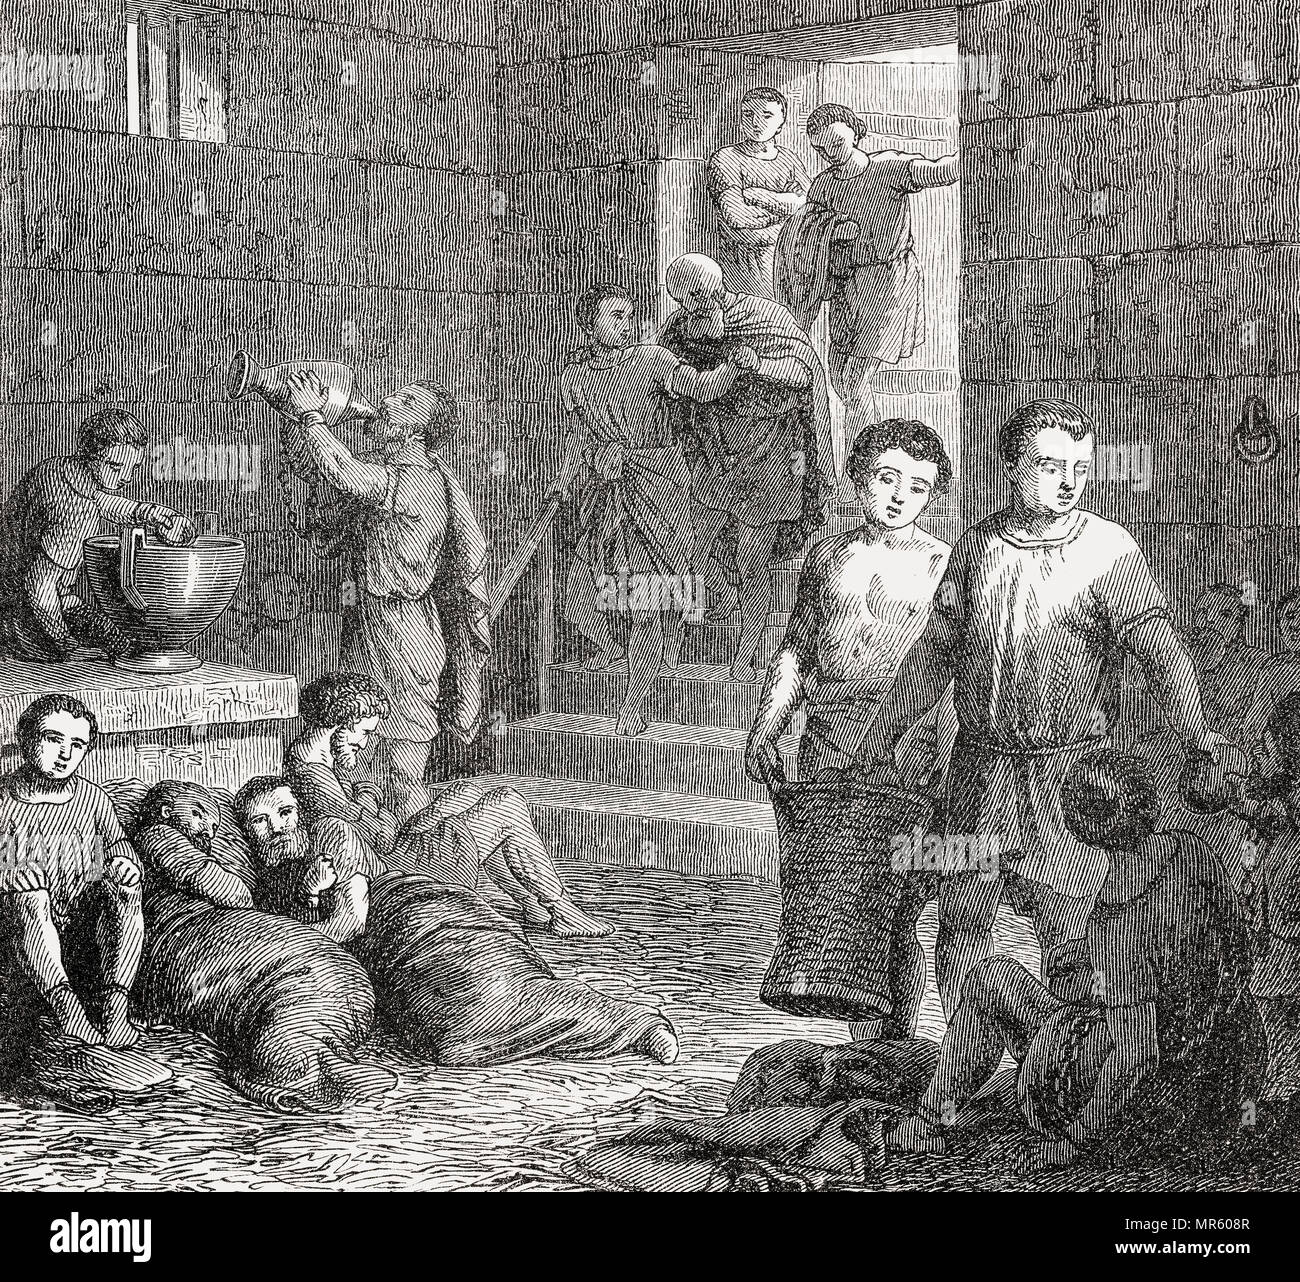 Sklaverei Im Antiken Rom Stockfotografie Alamy 